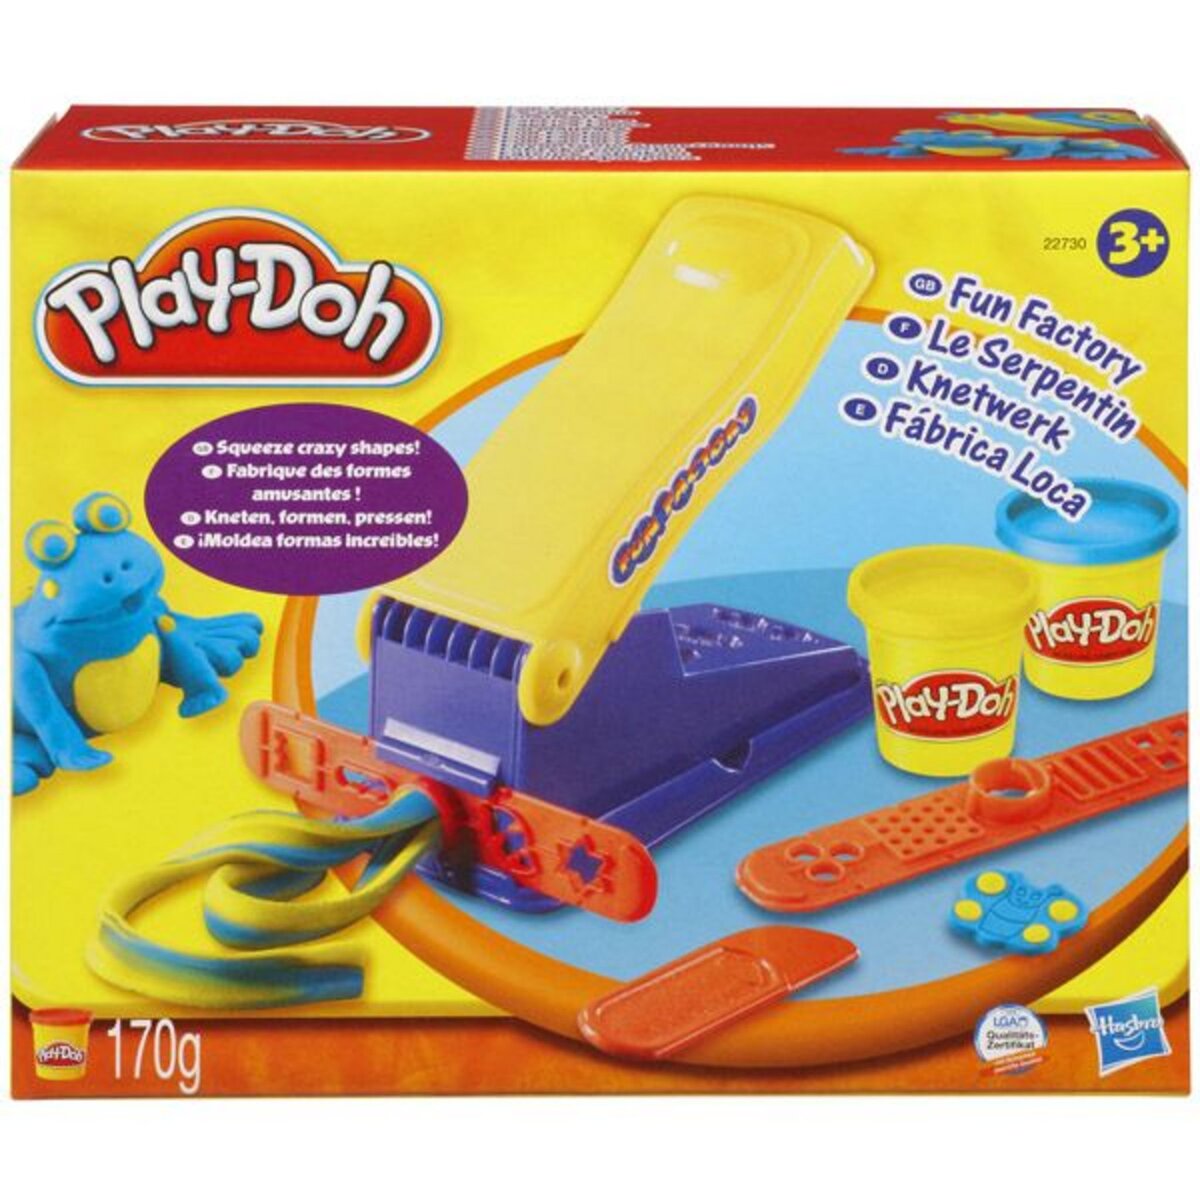 PLAY-DOH Le Serpentin Play-Doh